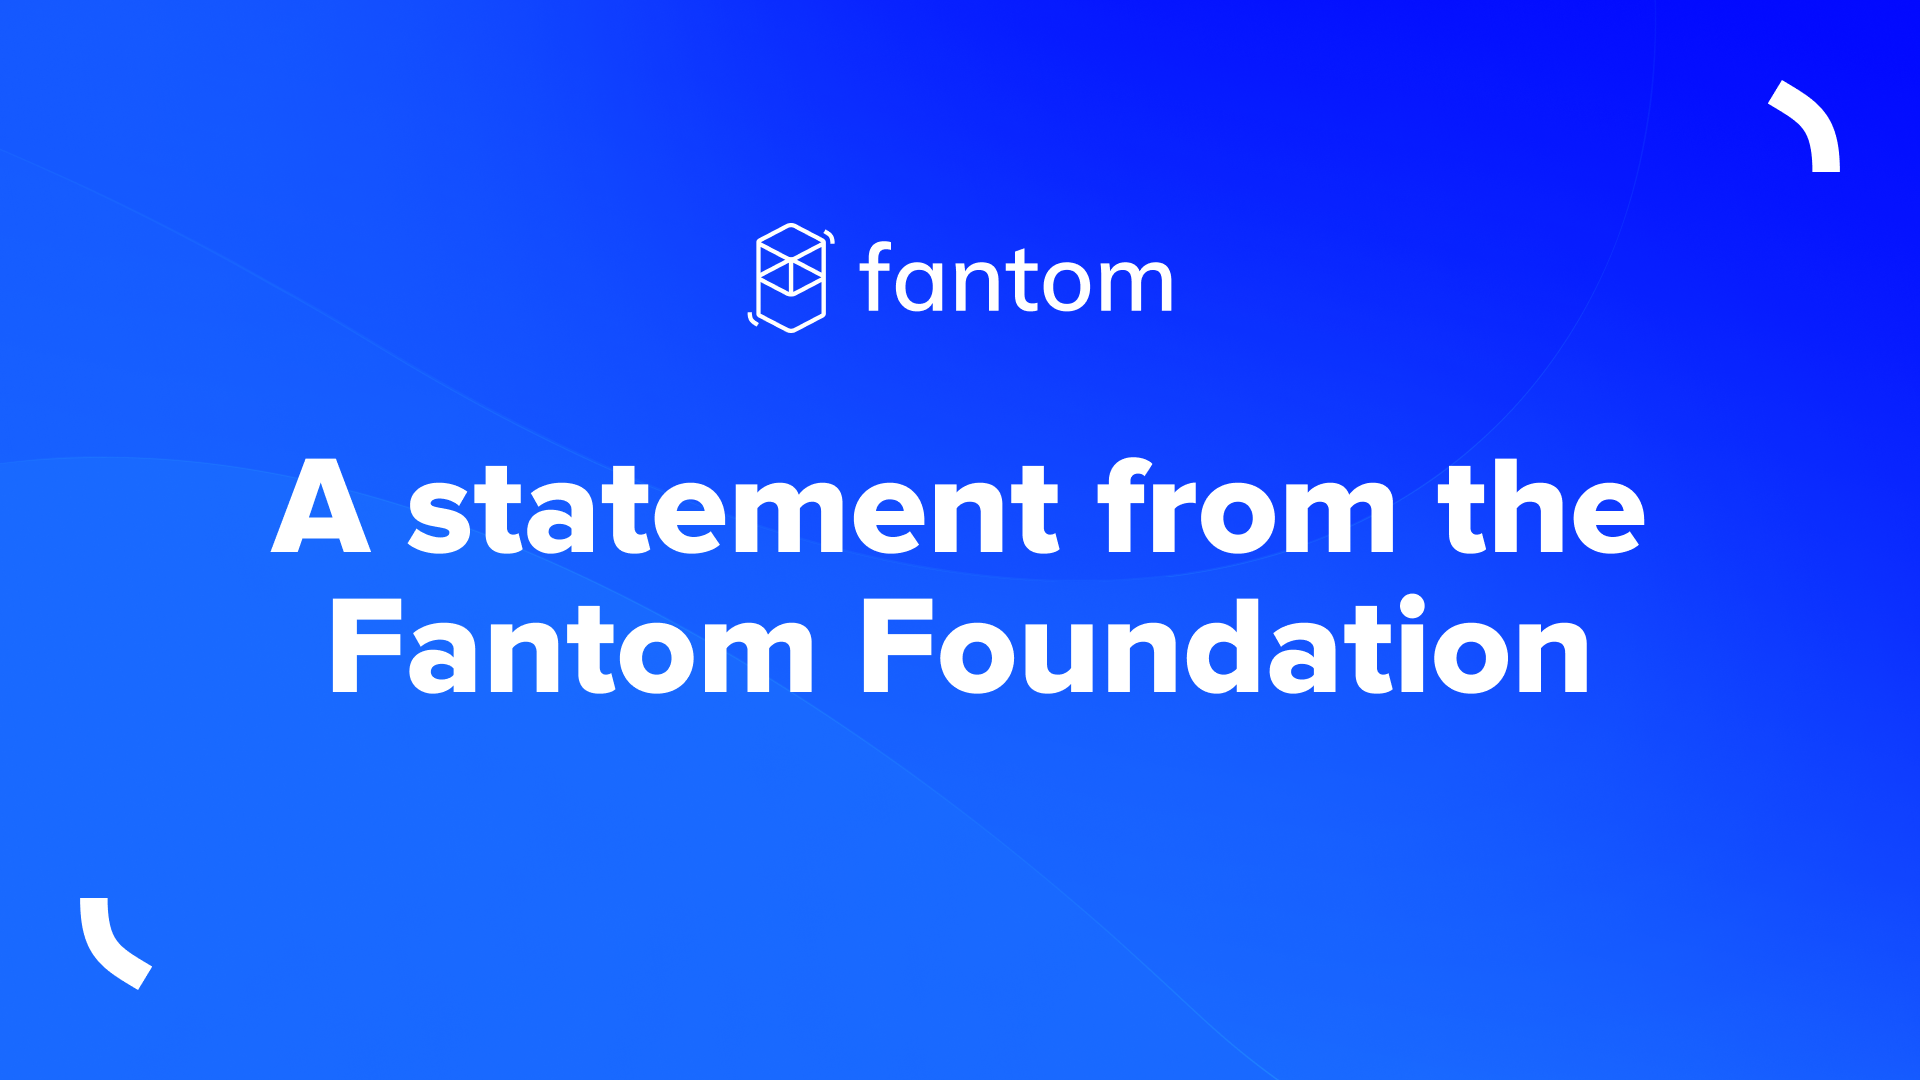 Nguồn: Fantom Foundation